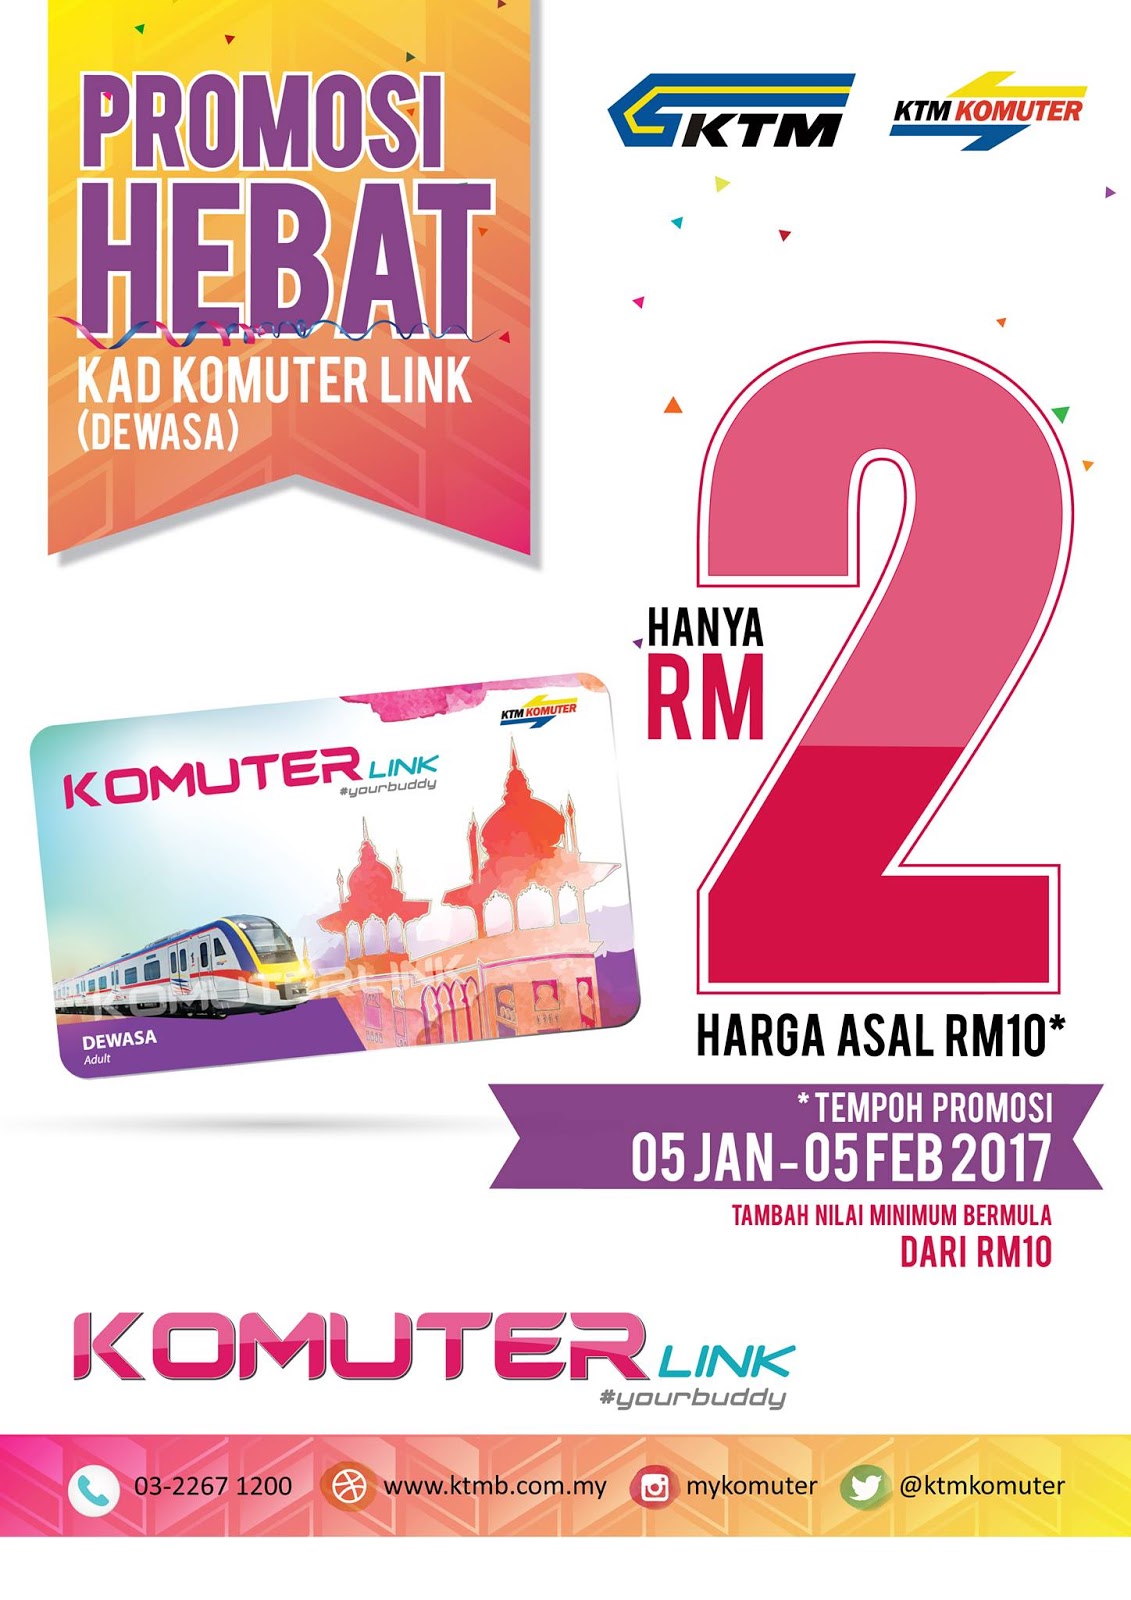 KTM Kad Komuter Link RM2 (Normal Price: RM10, Minimum Top Up: RM10